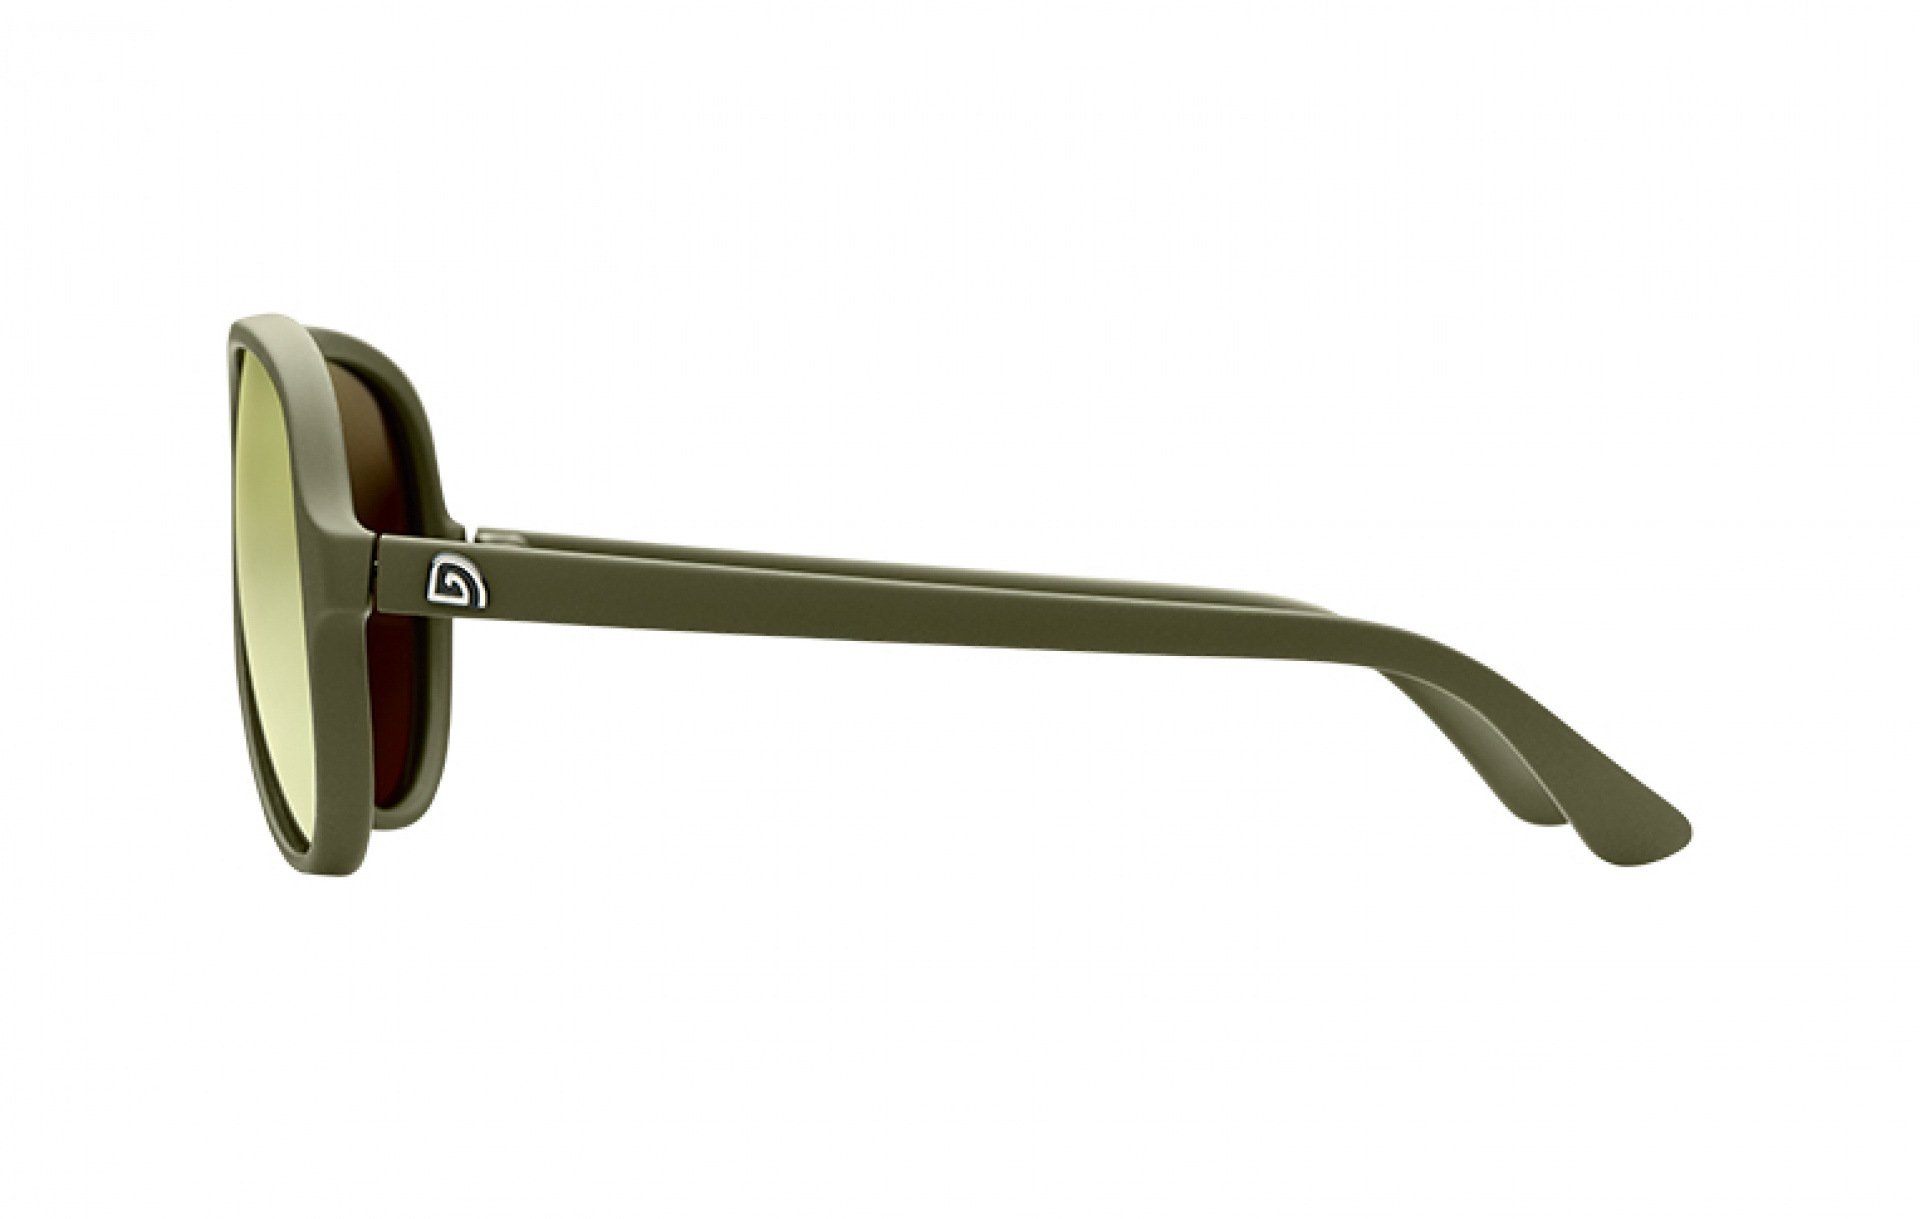 Trakker Navigator Polarized Sunglasses